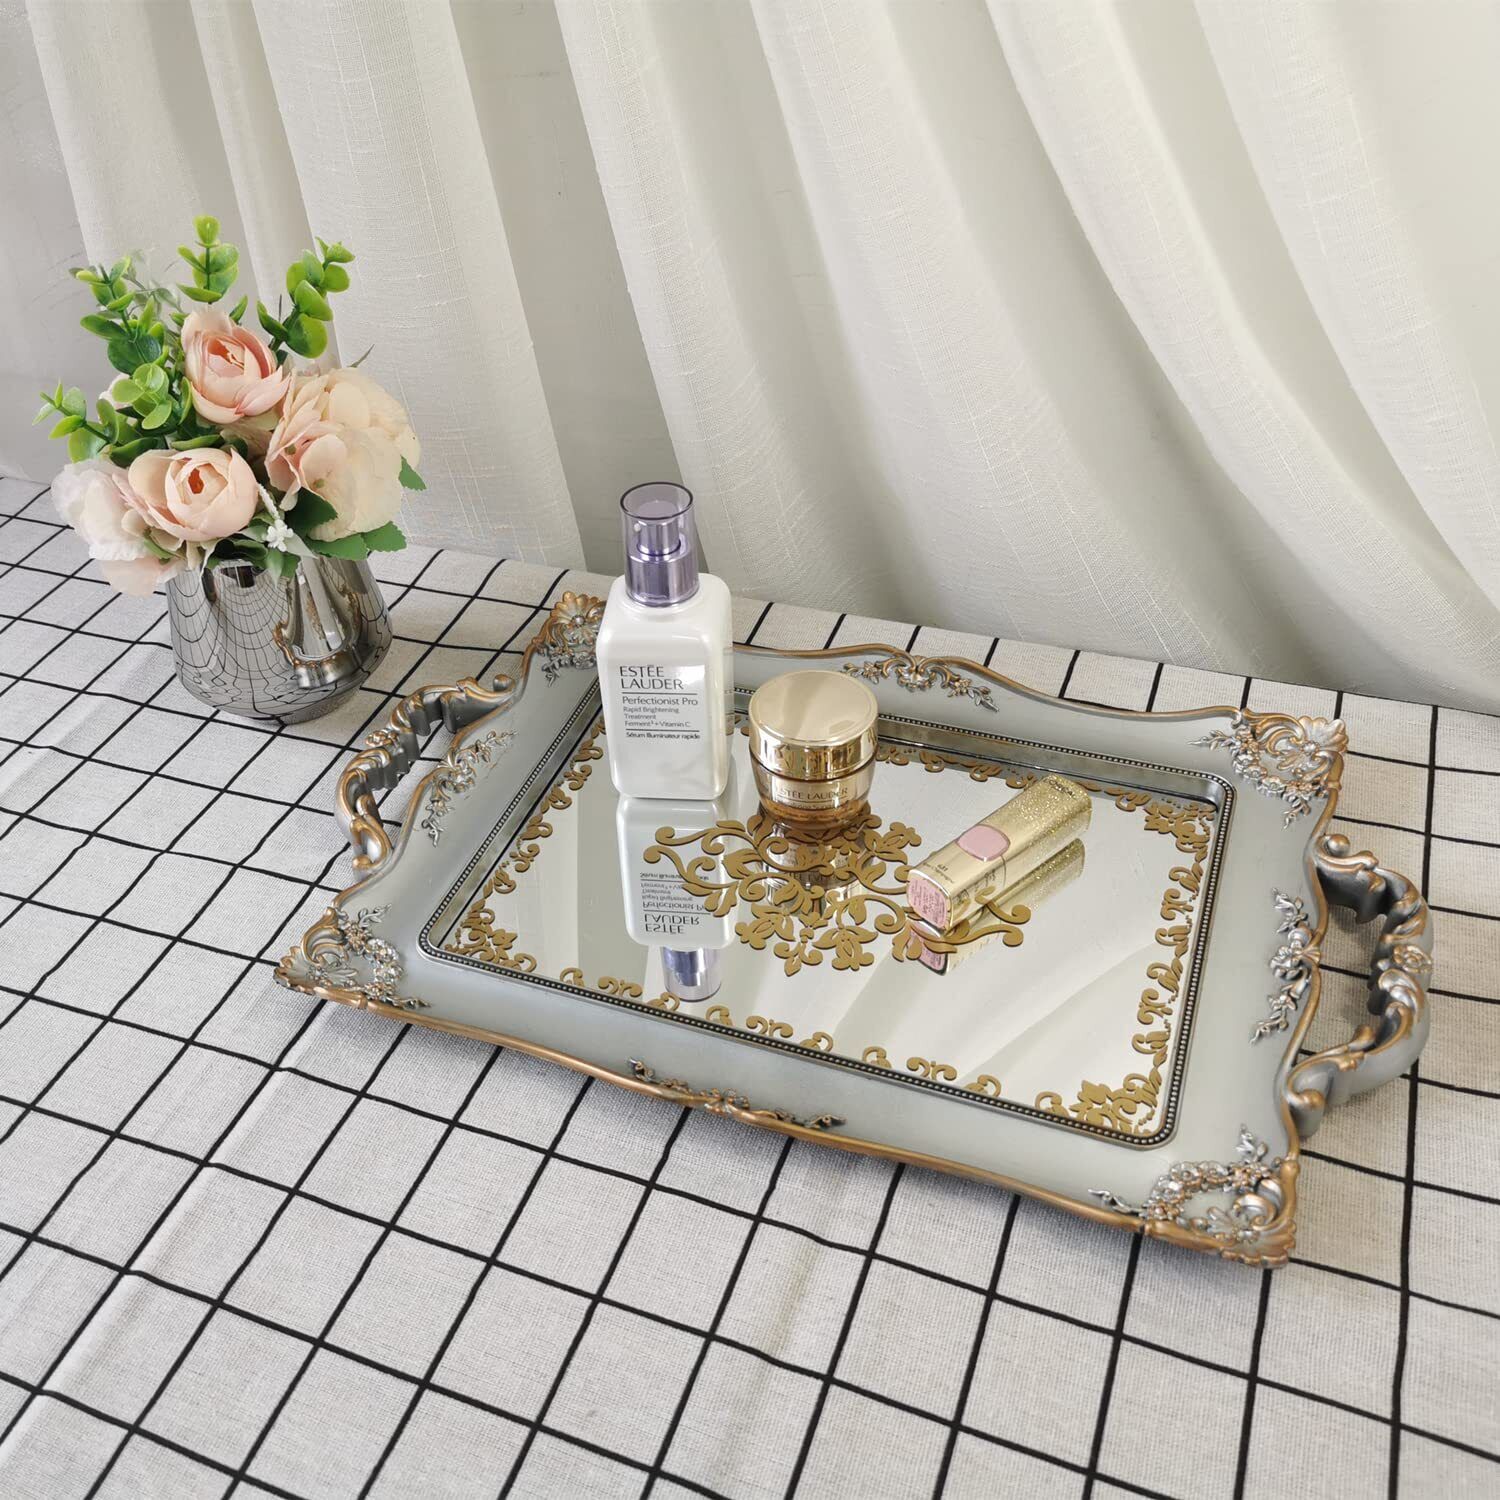 Yash YANIZU Decorative Mirror Tray, Floral Vanity Organizer for Makeup, Jewel...